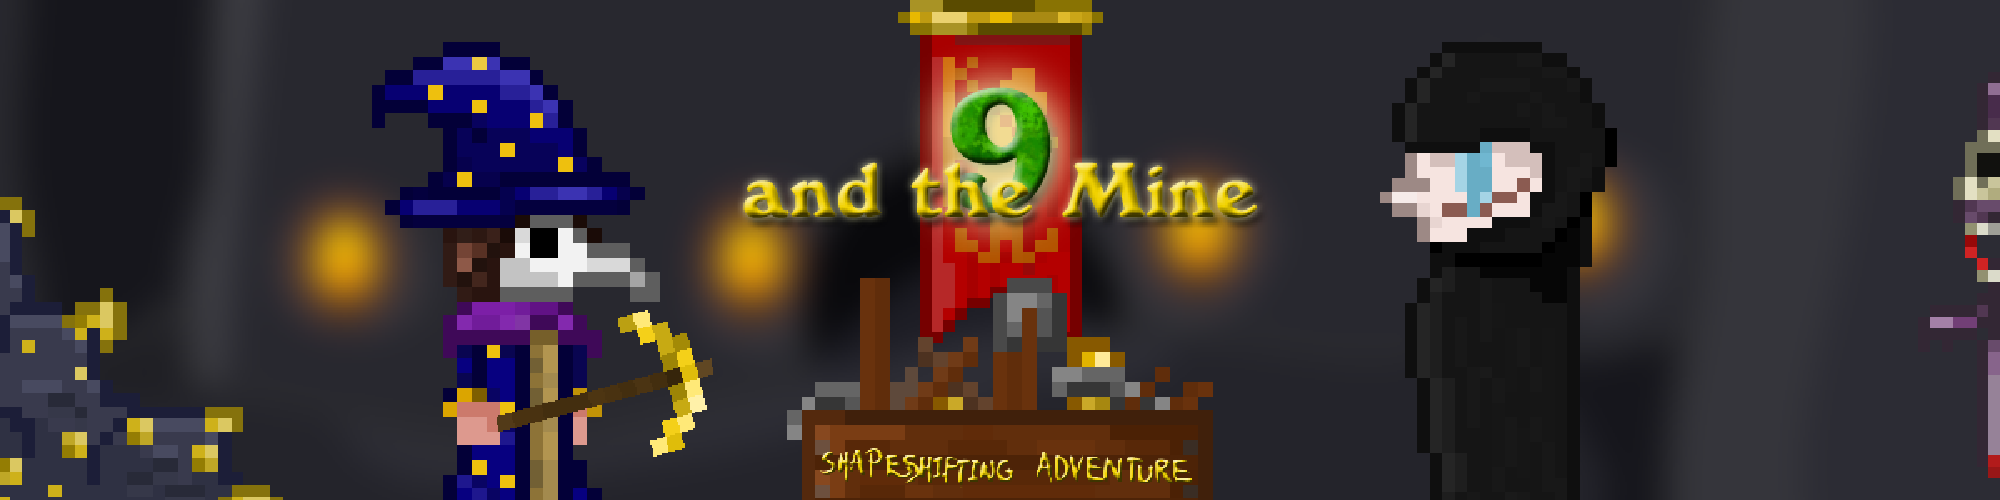 Shapeshifting Adventure: Nine and the Mine